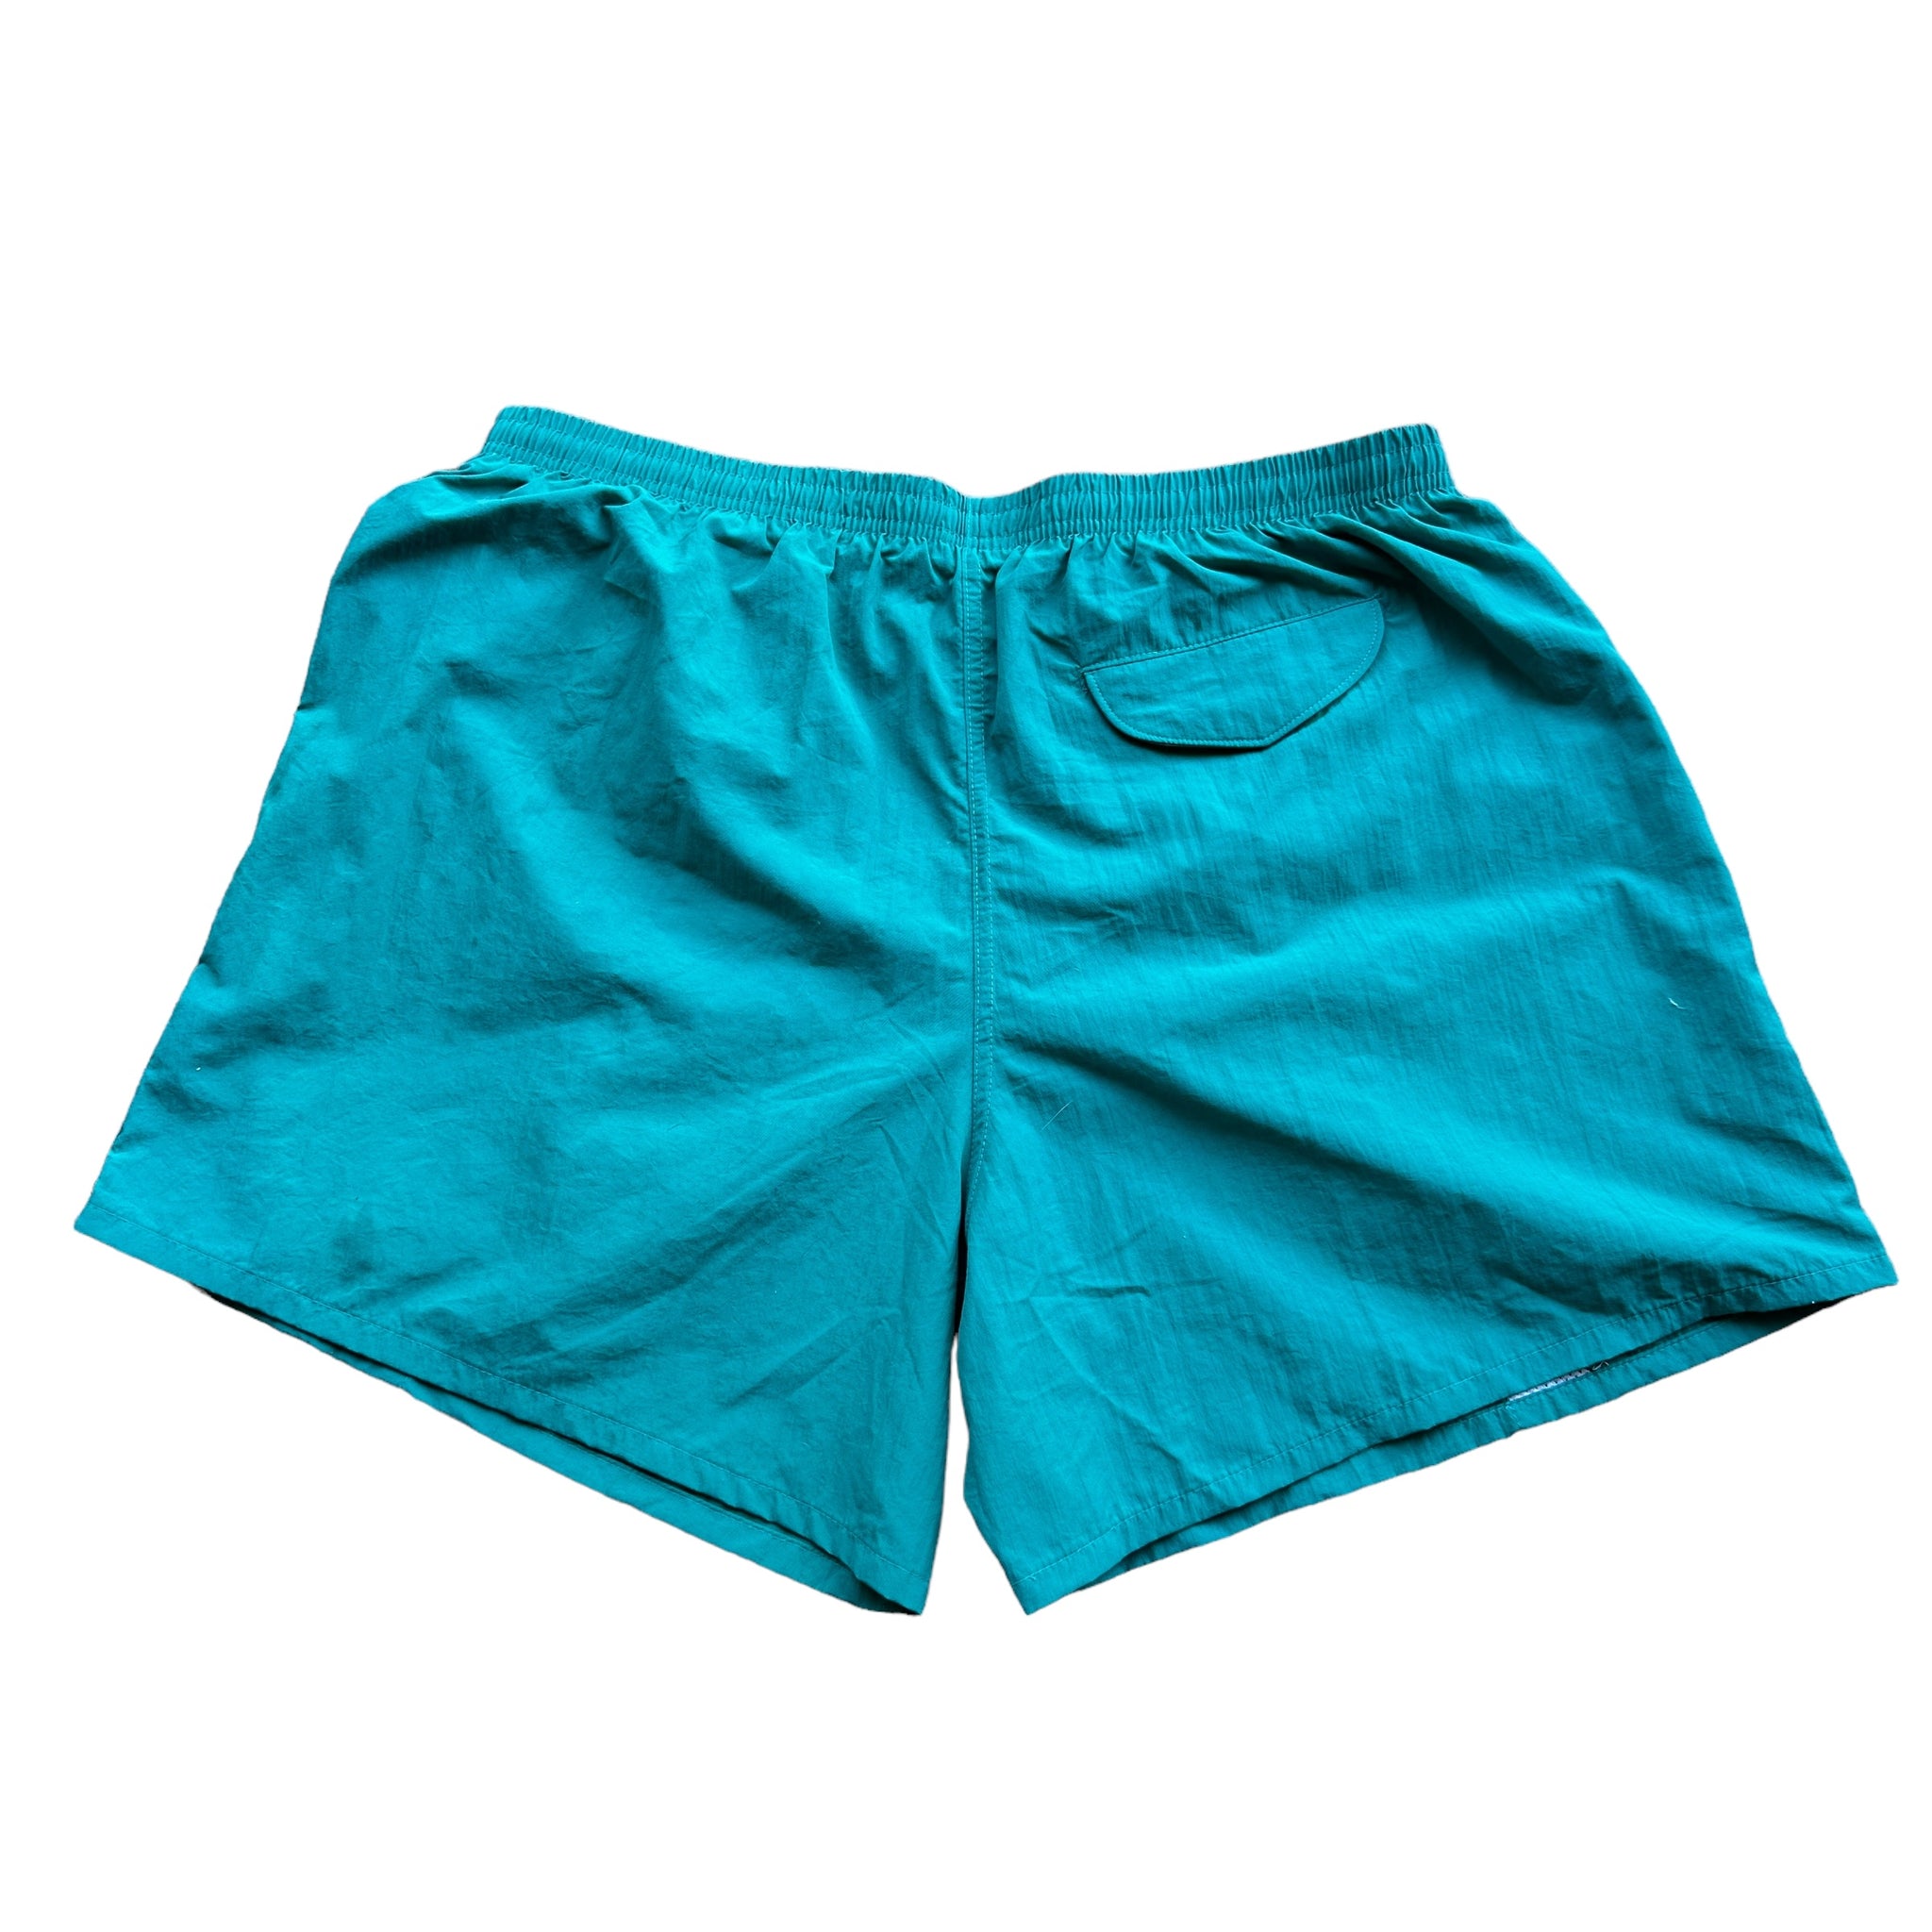 90s LL Bean trunks shorts bathing suit XL